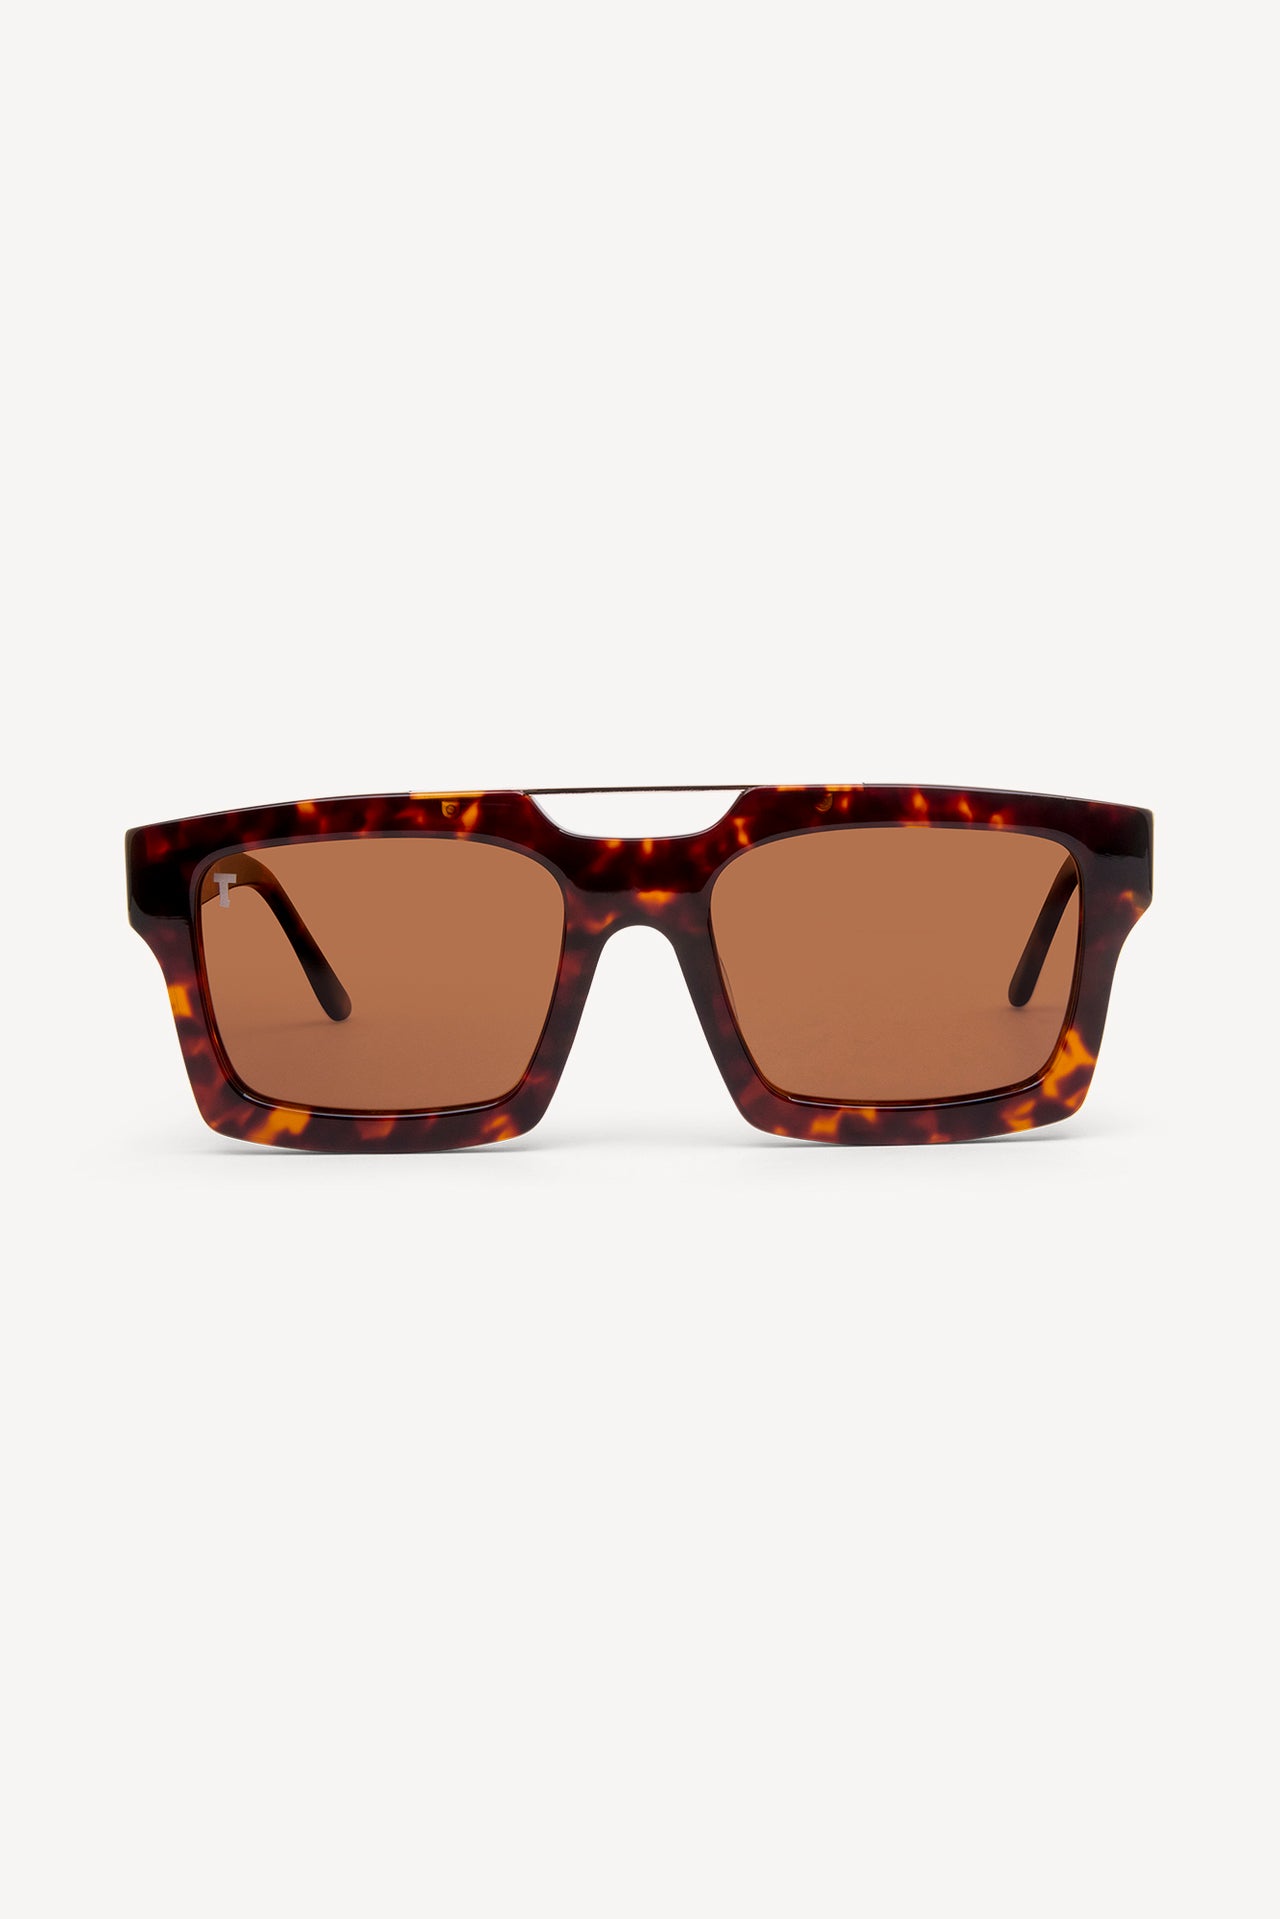 TOATIE Havana Square Sunglasses TORTOISE/BROWN